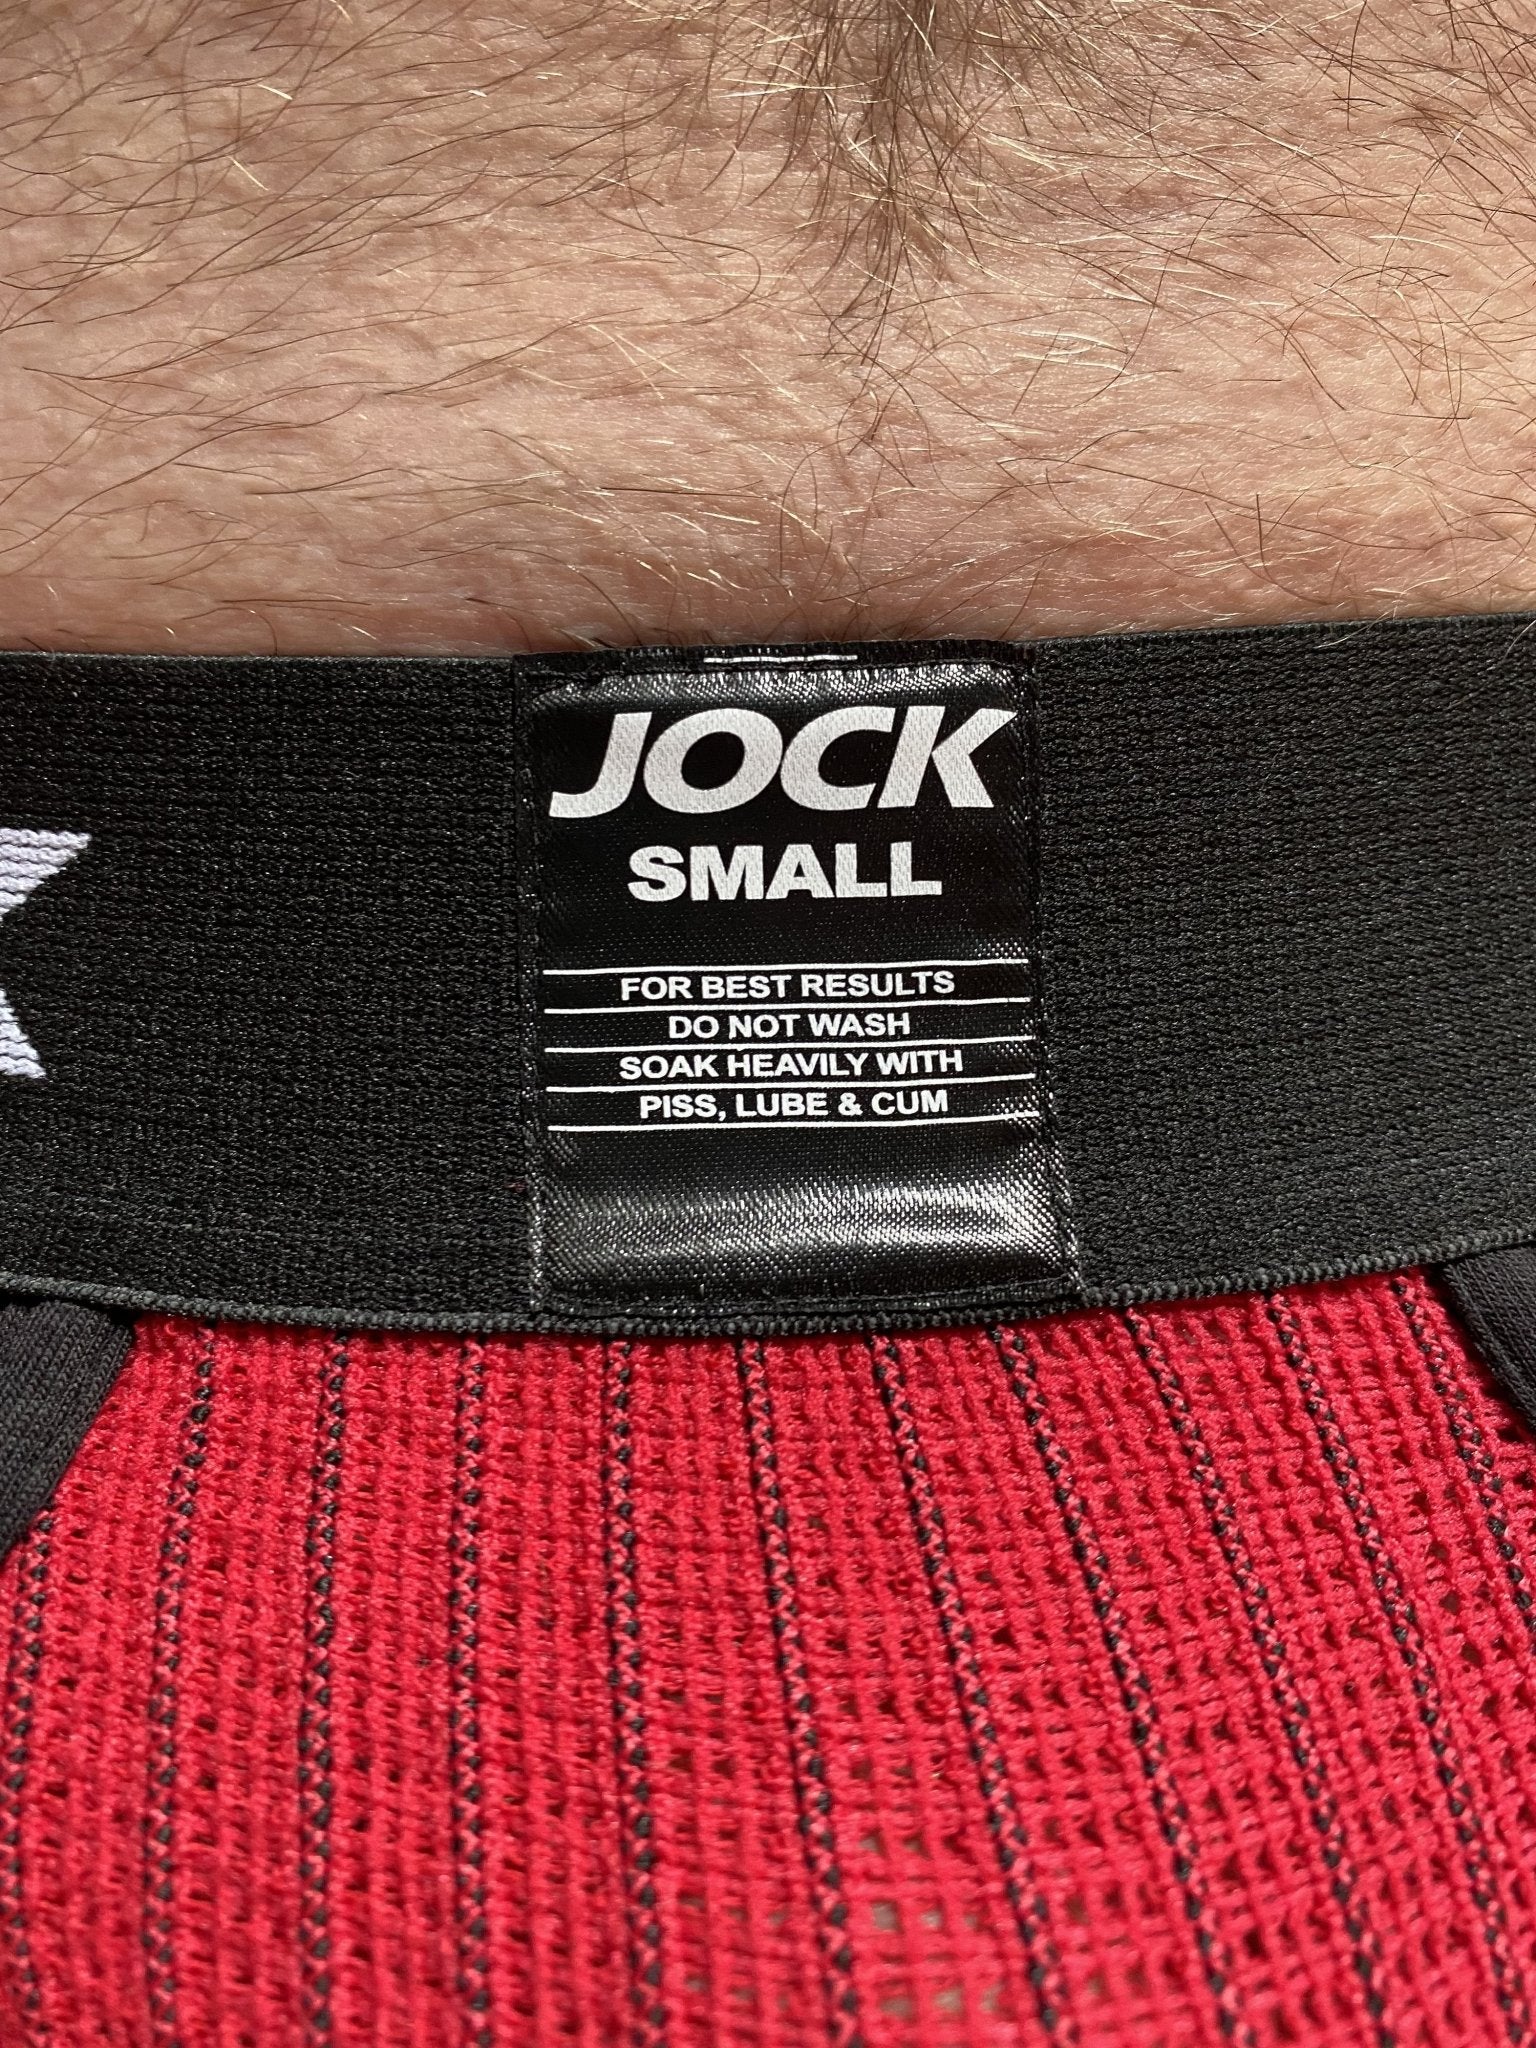 JOCK Jock-Pouch Brief - Jockstraps.com